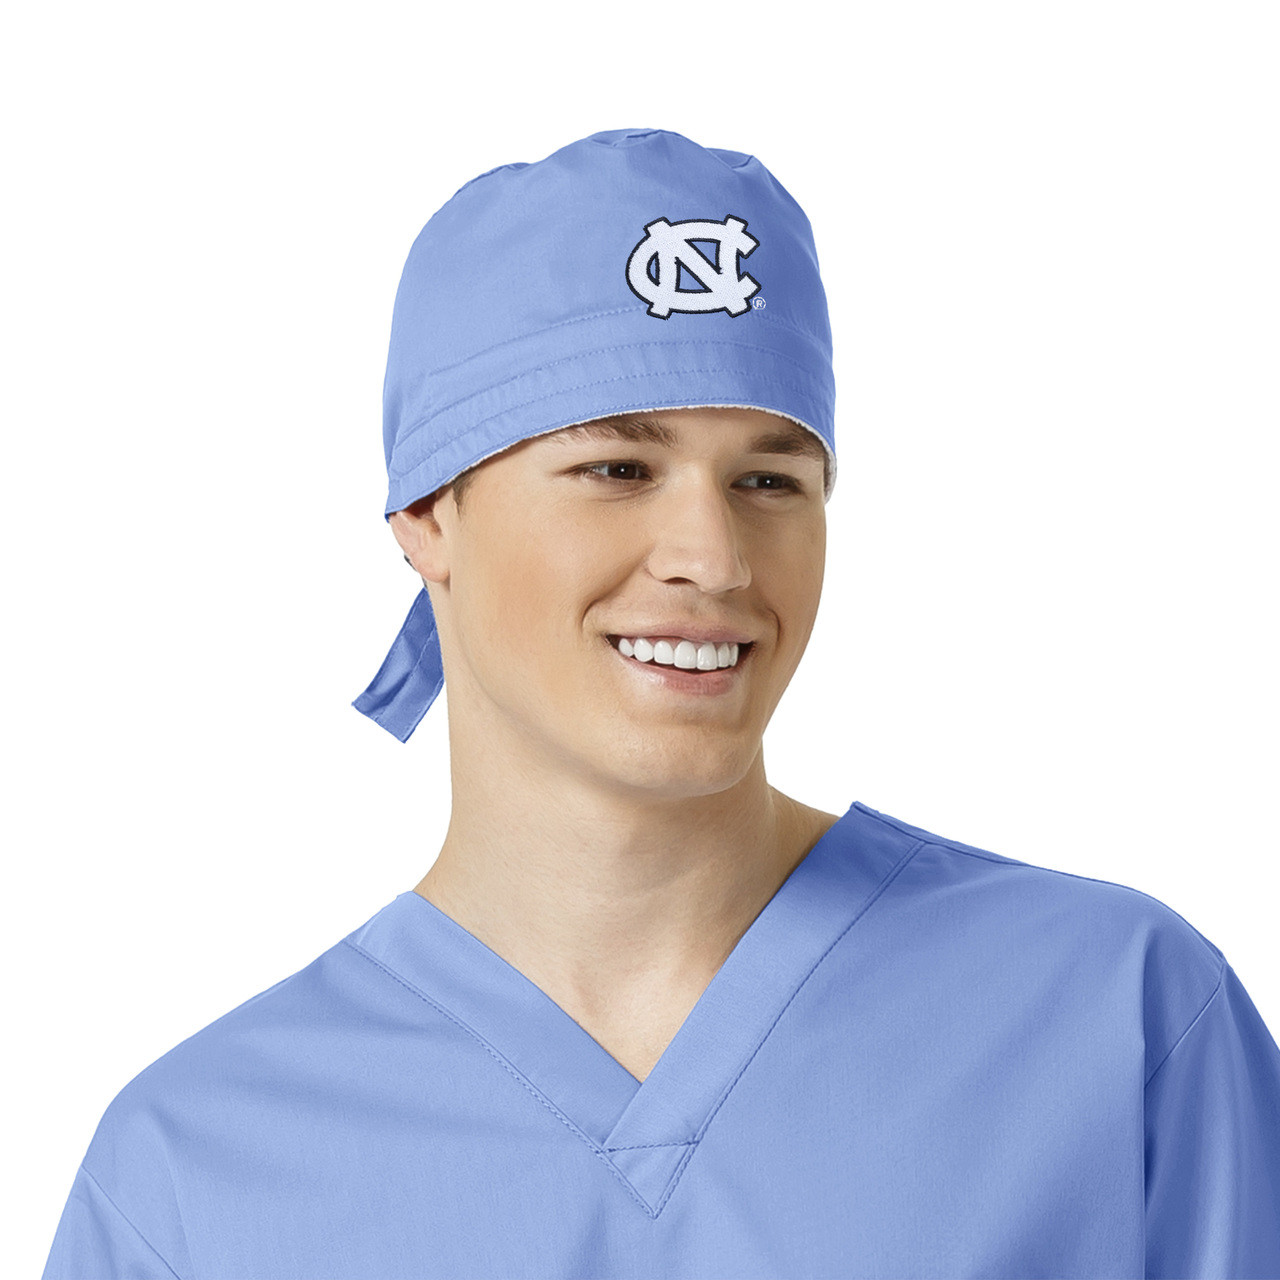 University of North Carolina Tar Heels Scrub Cap for Men